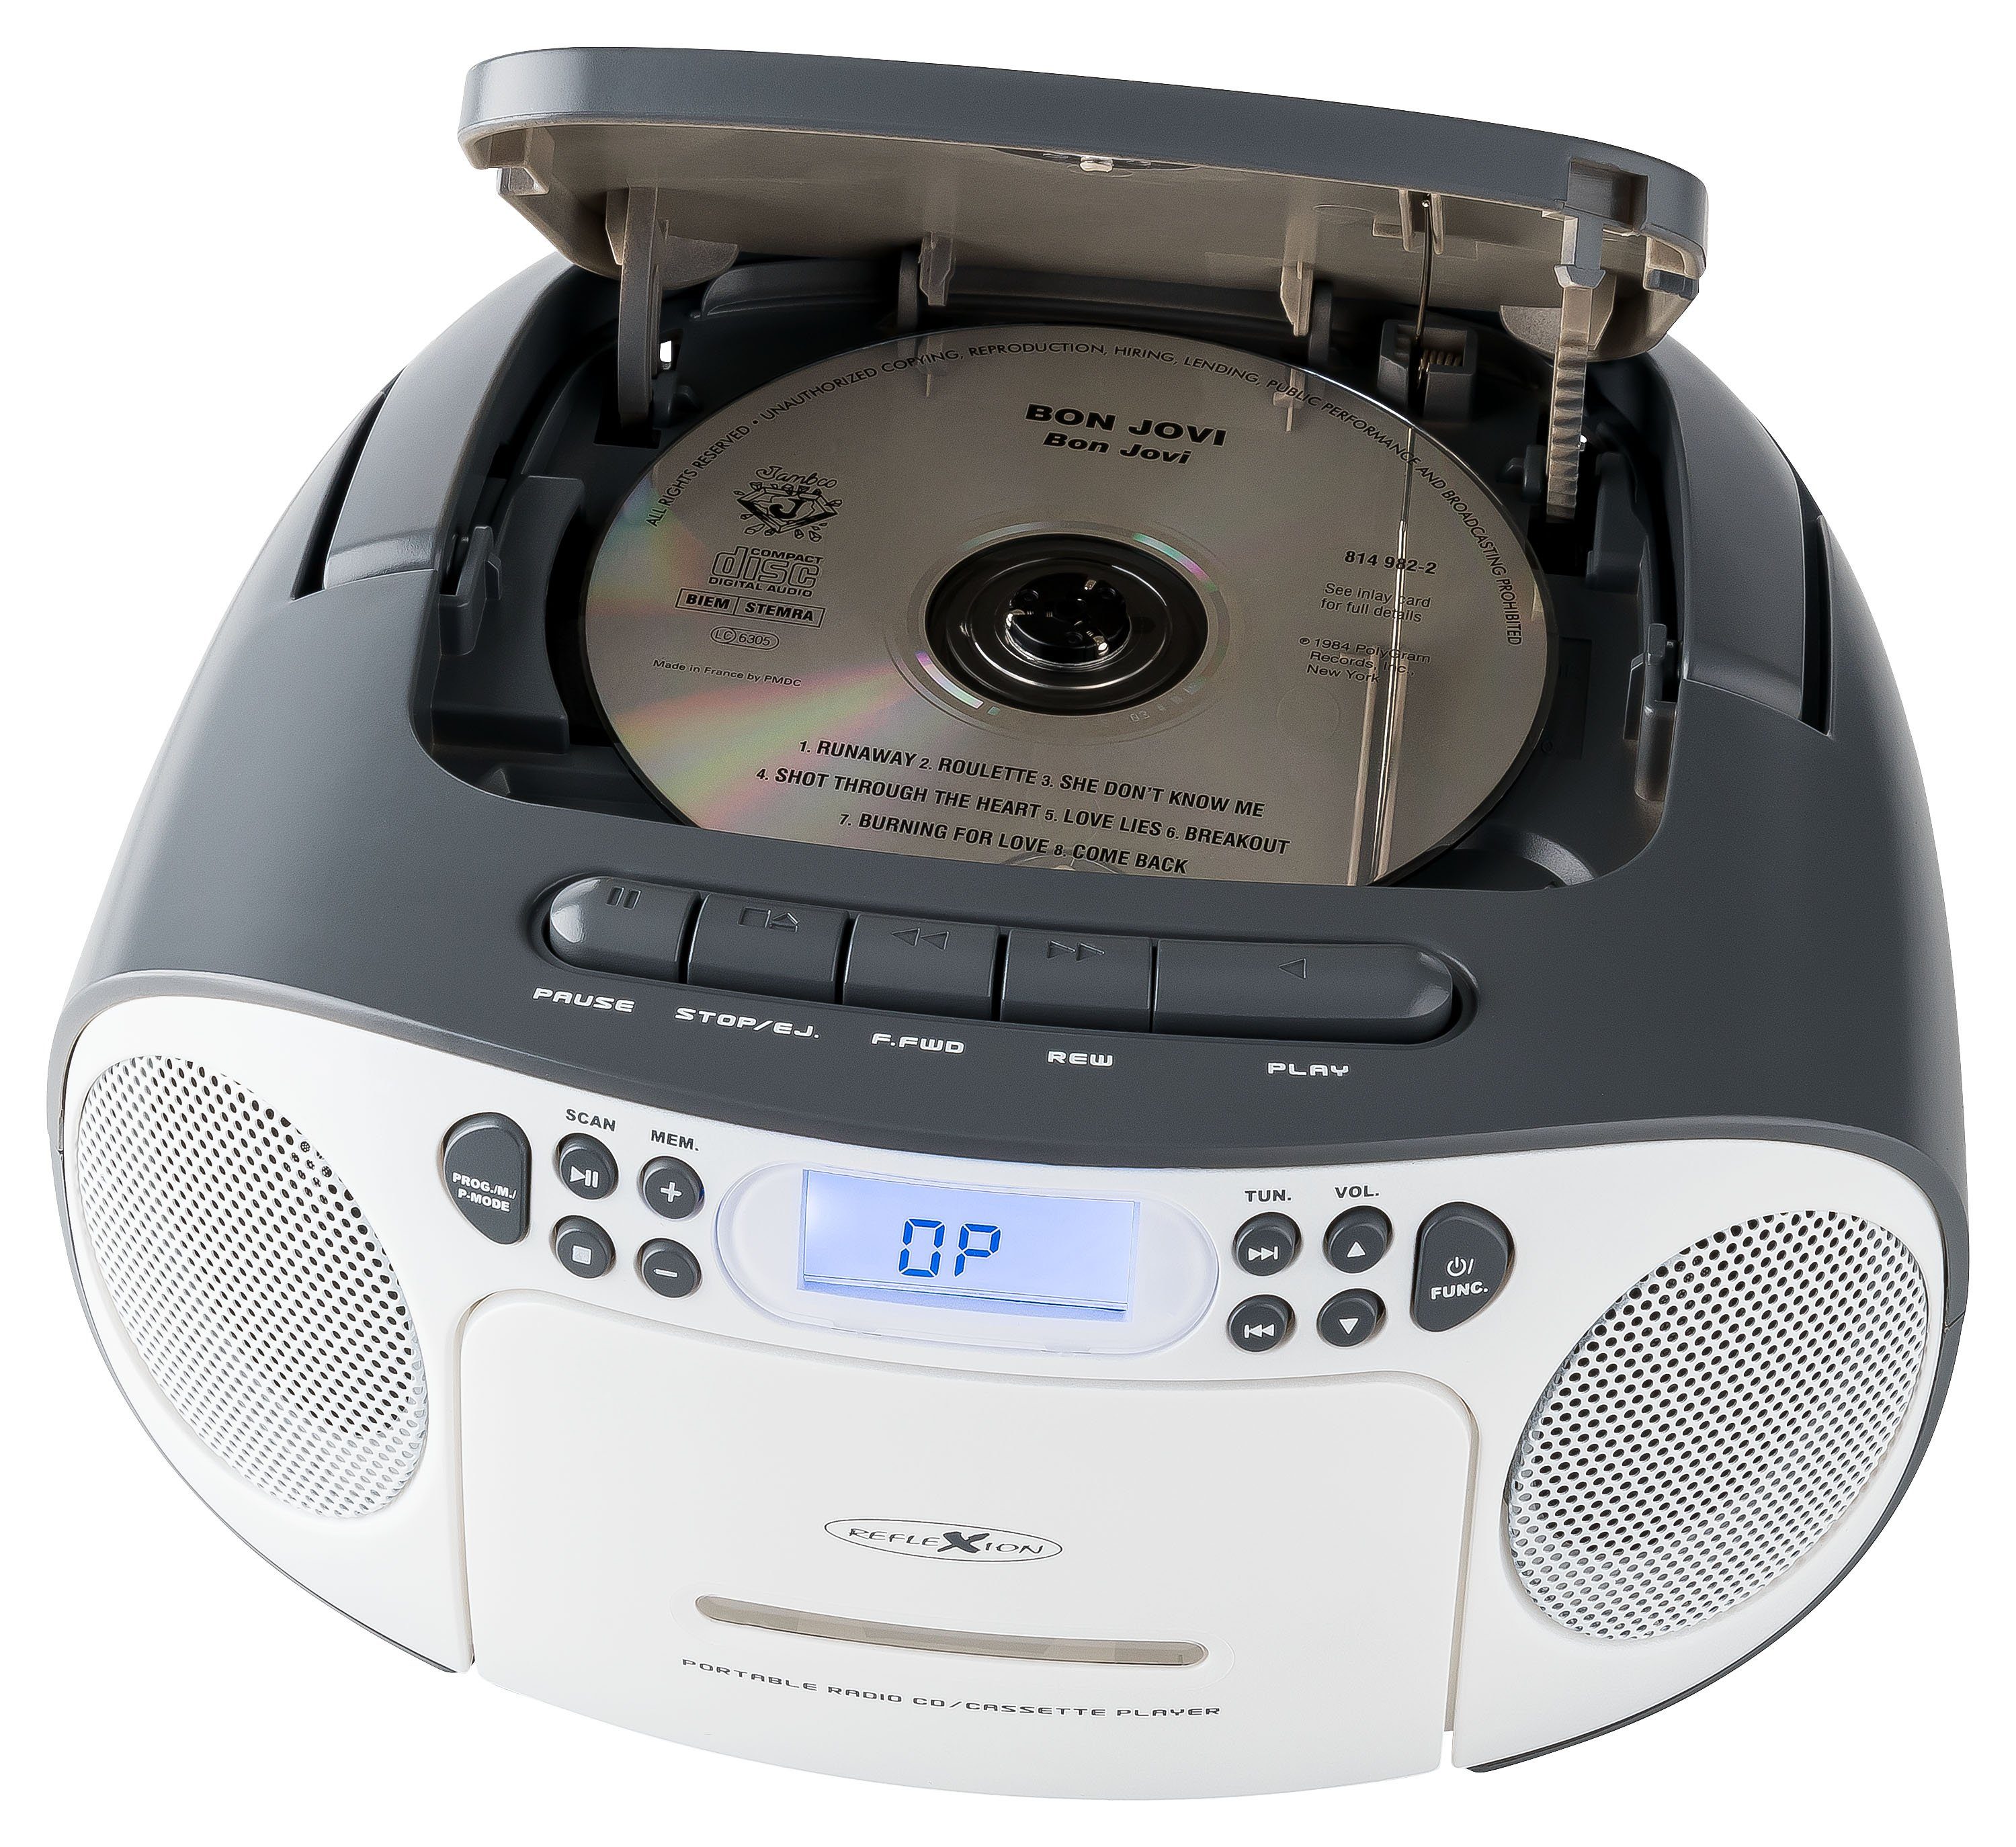 Reflexion RCR2260 Boombox (UKW PLL Stereo Radio, 20 W, Tragbare Boombox CD/Radio/Kassette, LCD-Display, AUX-Eingang, Kopfhörer-Anschluss) weiß/grau